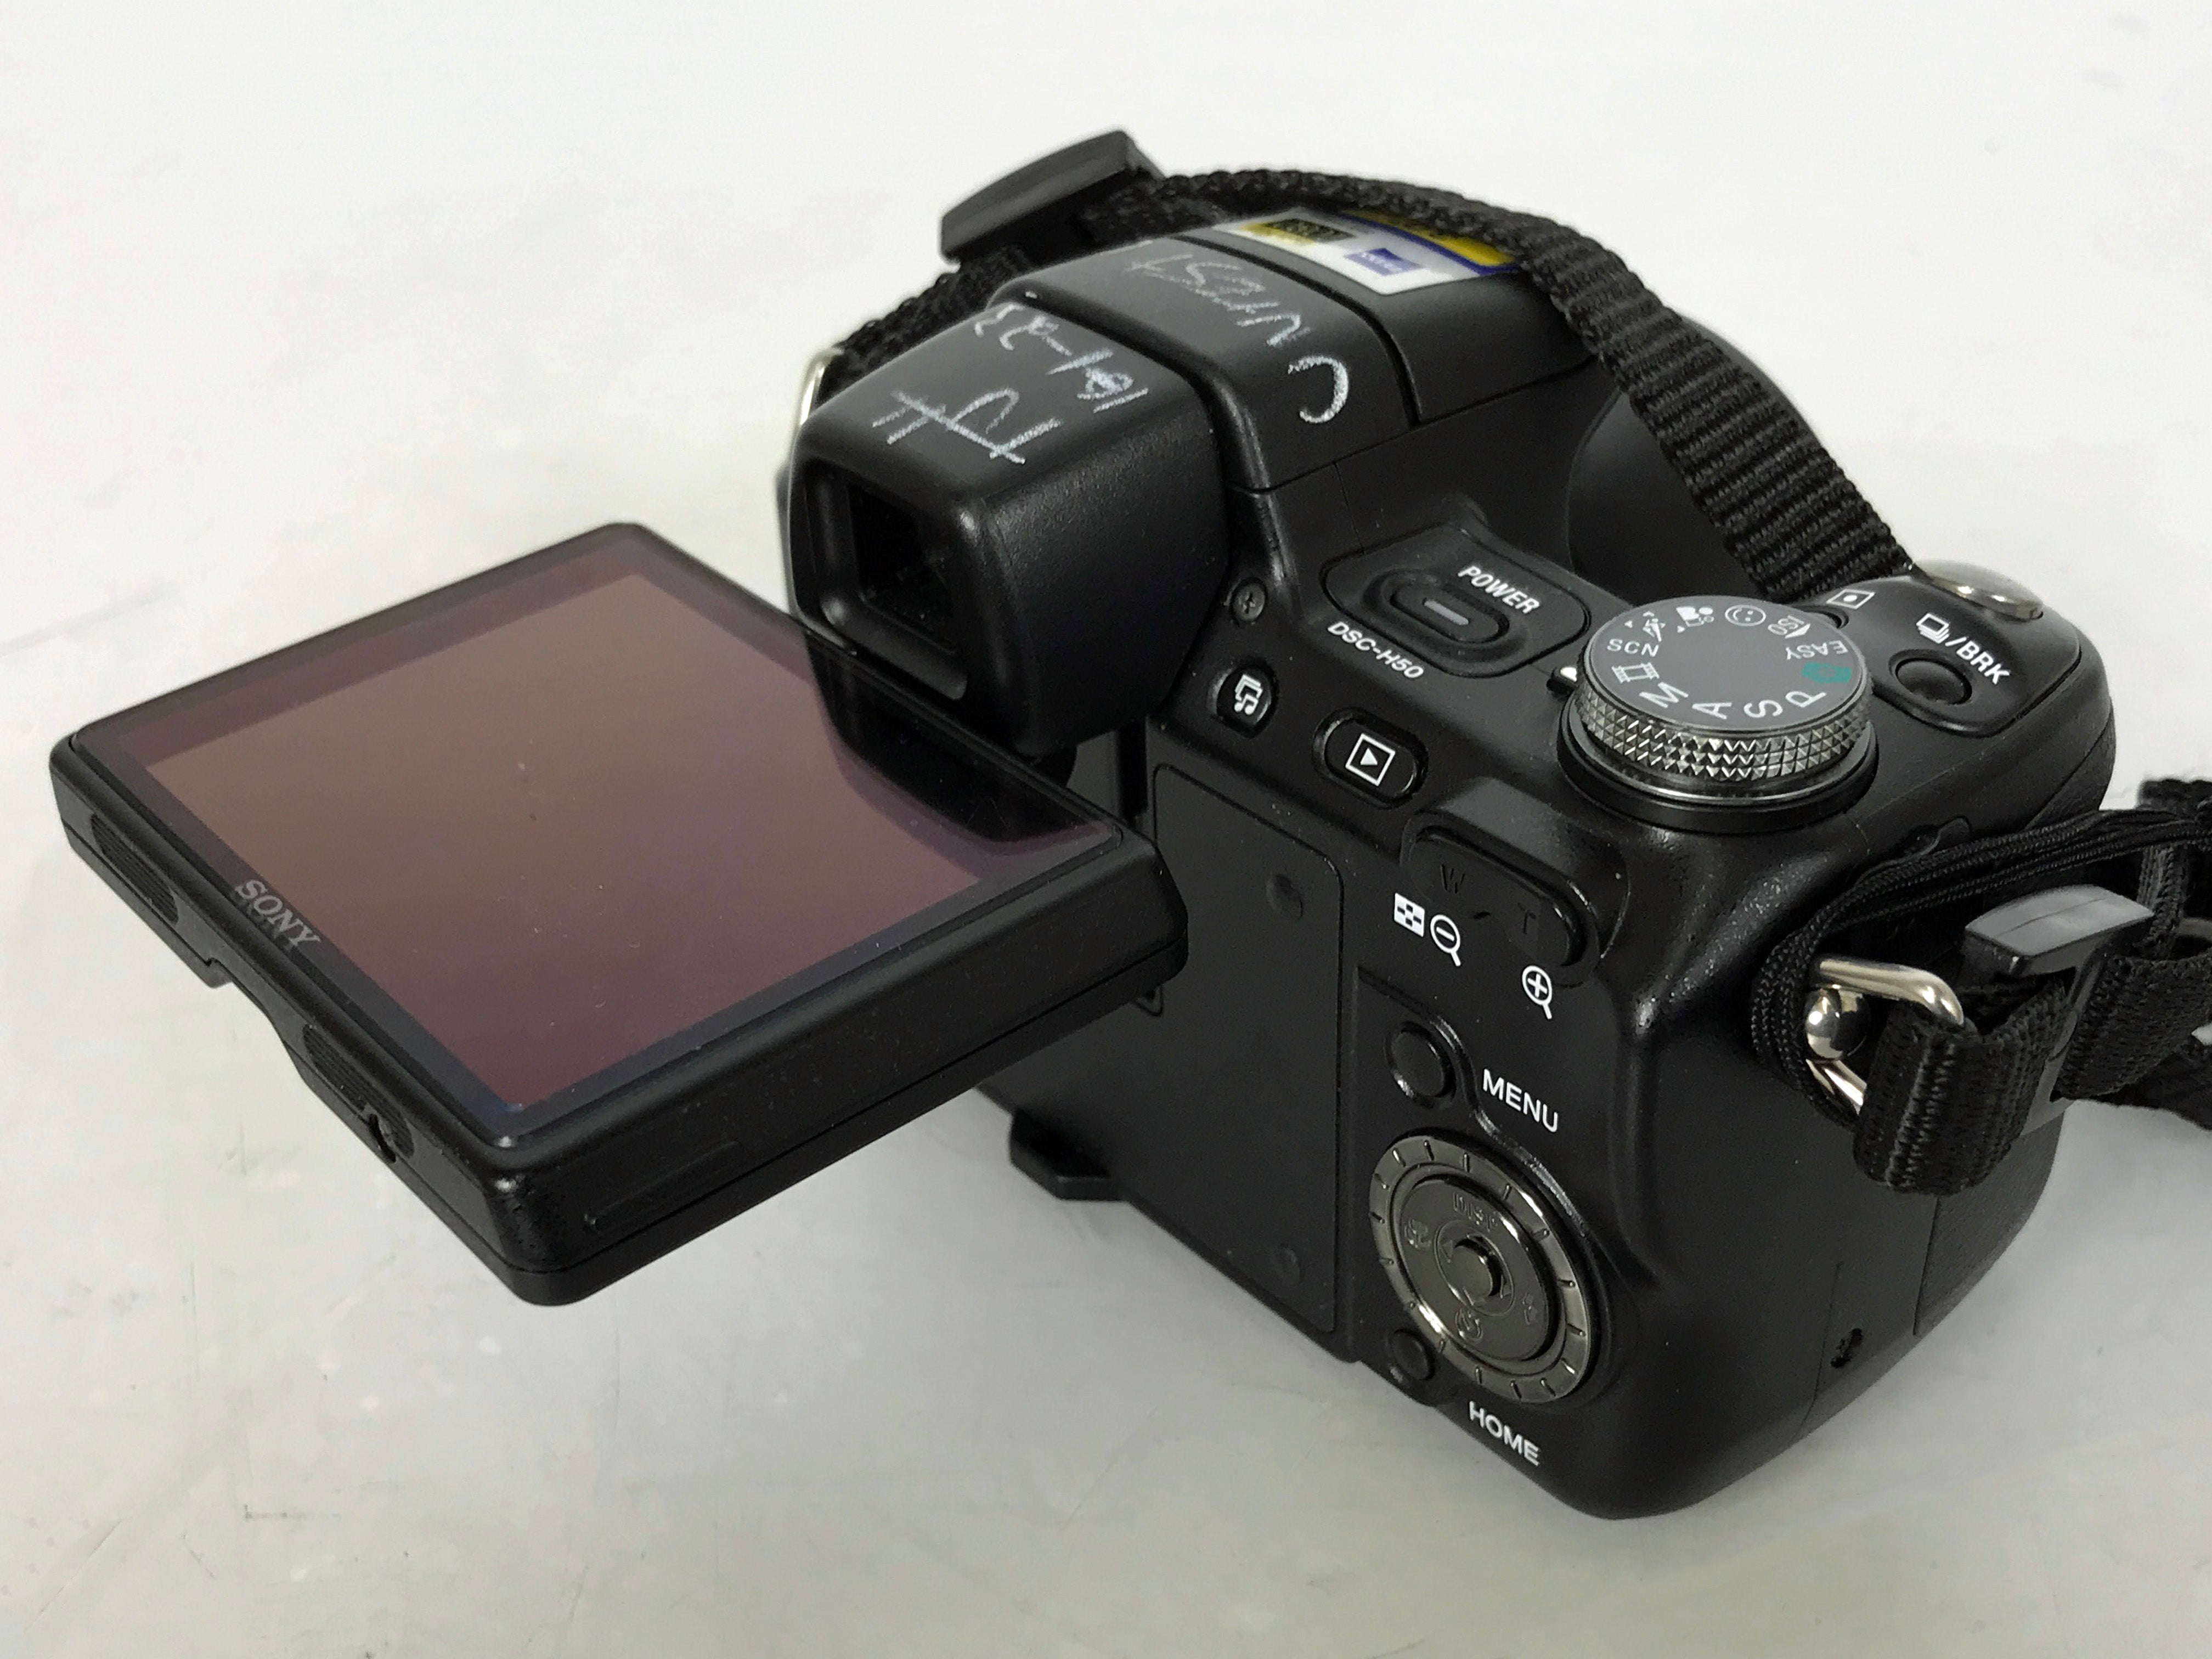 Sony Cyber-shot DSC-H50 9.1 MP Digital Camera